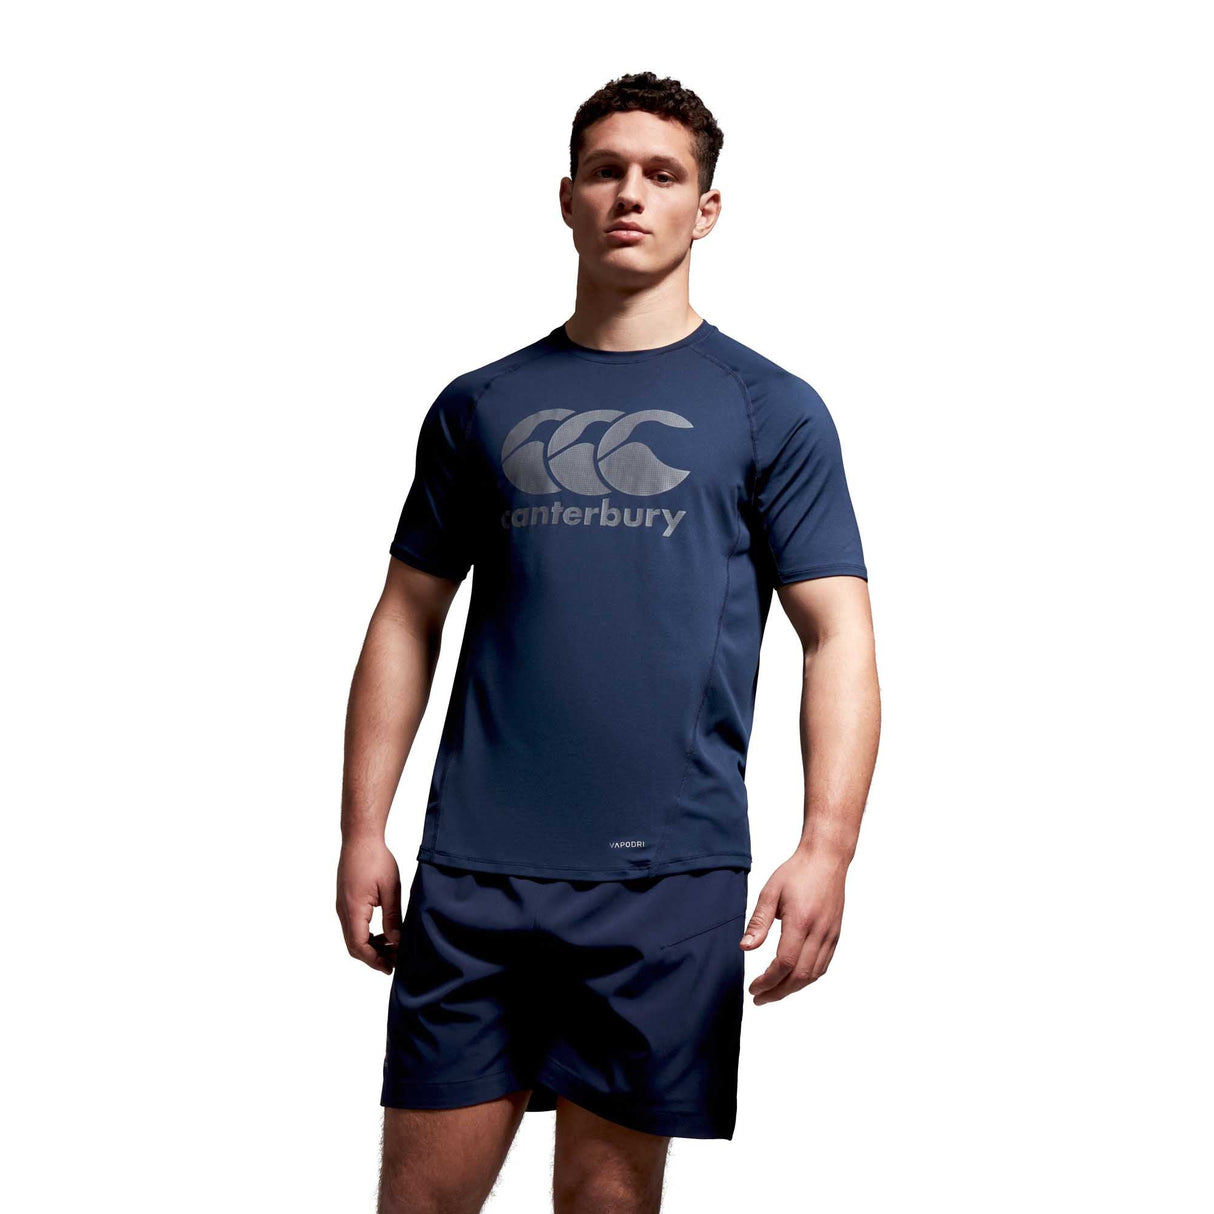 Canterbury Men's Superlight T-Shirt - Navy |T-Shirt | Canterbury | Absolute Rugby